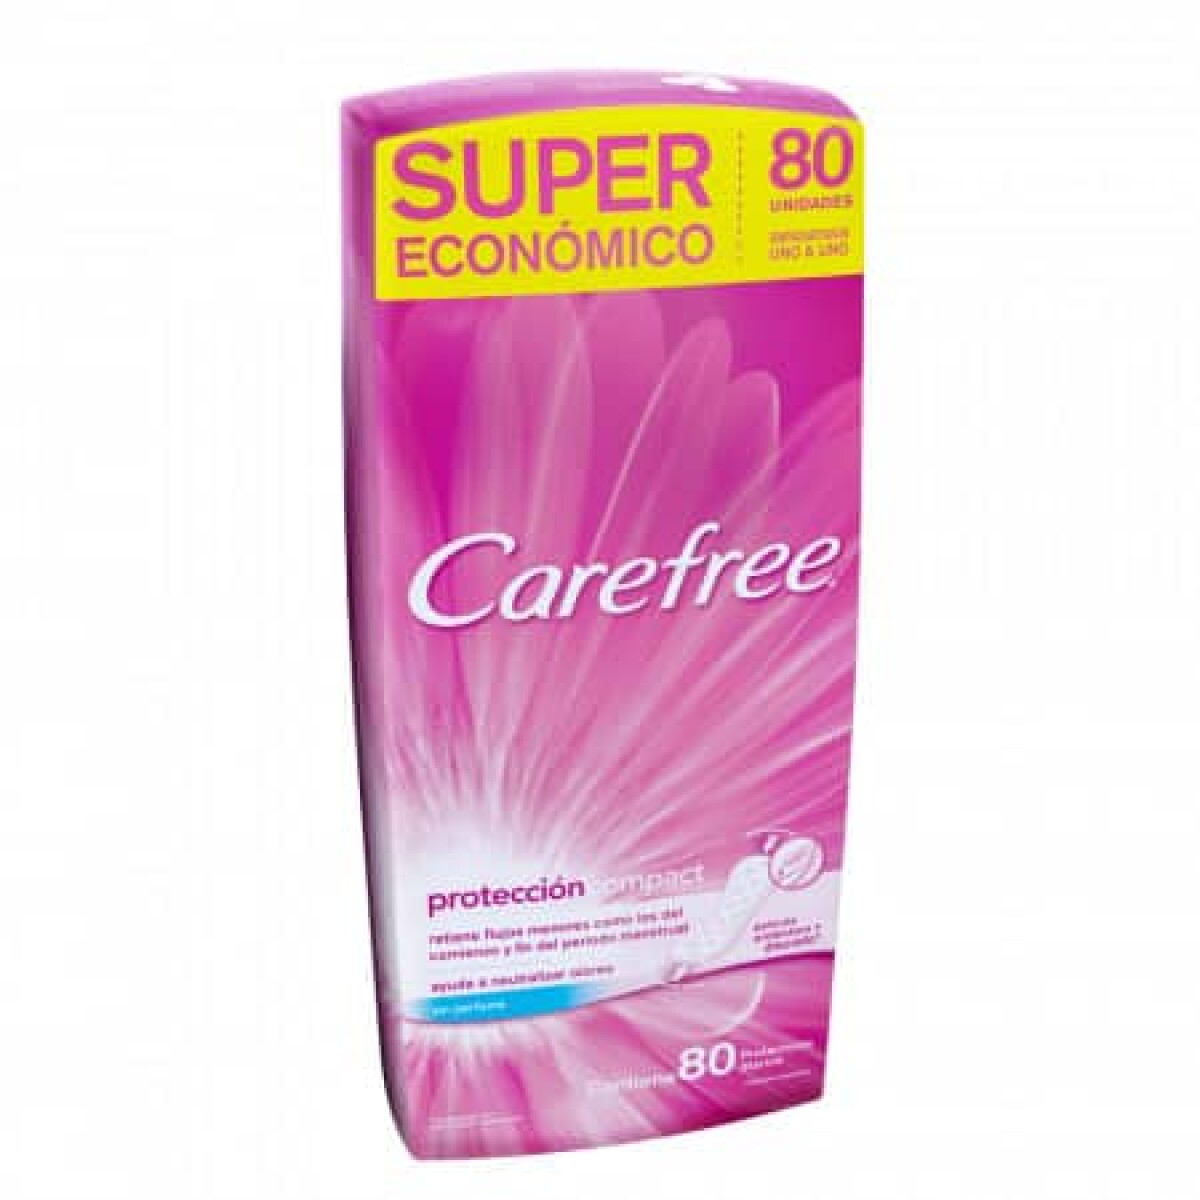 Carefree Proteccion Compact S/Perfum 